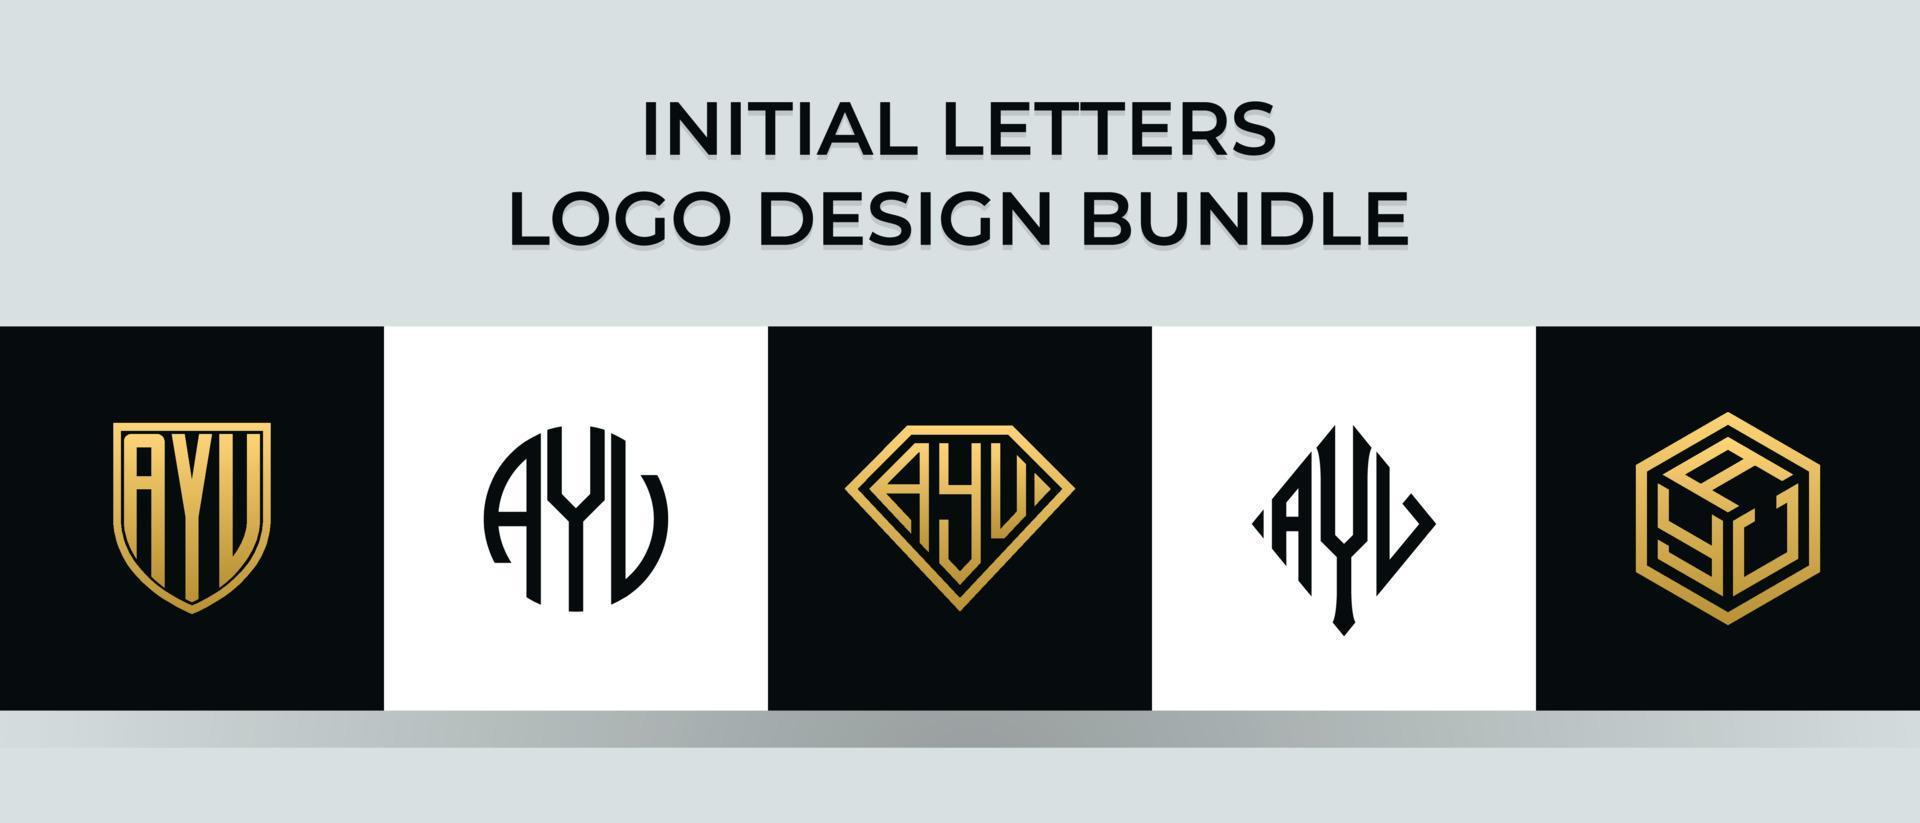 Initial letters AYV logo designs Bundle vector